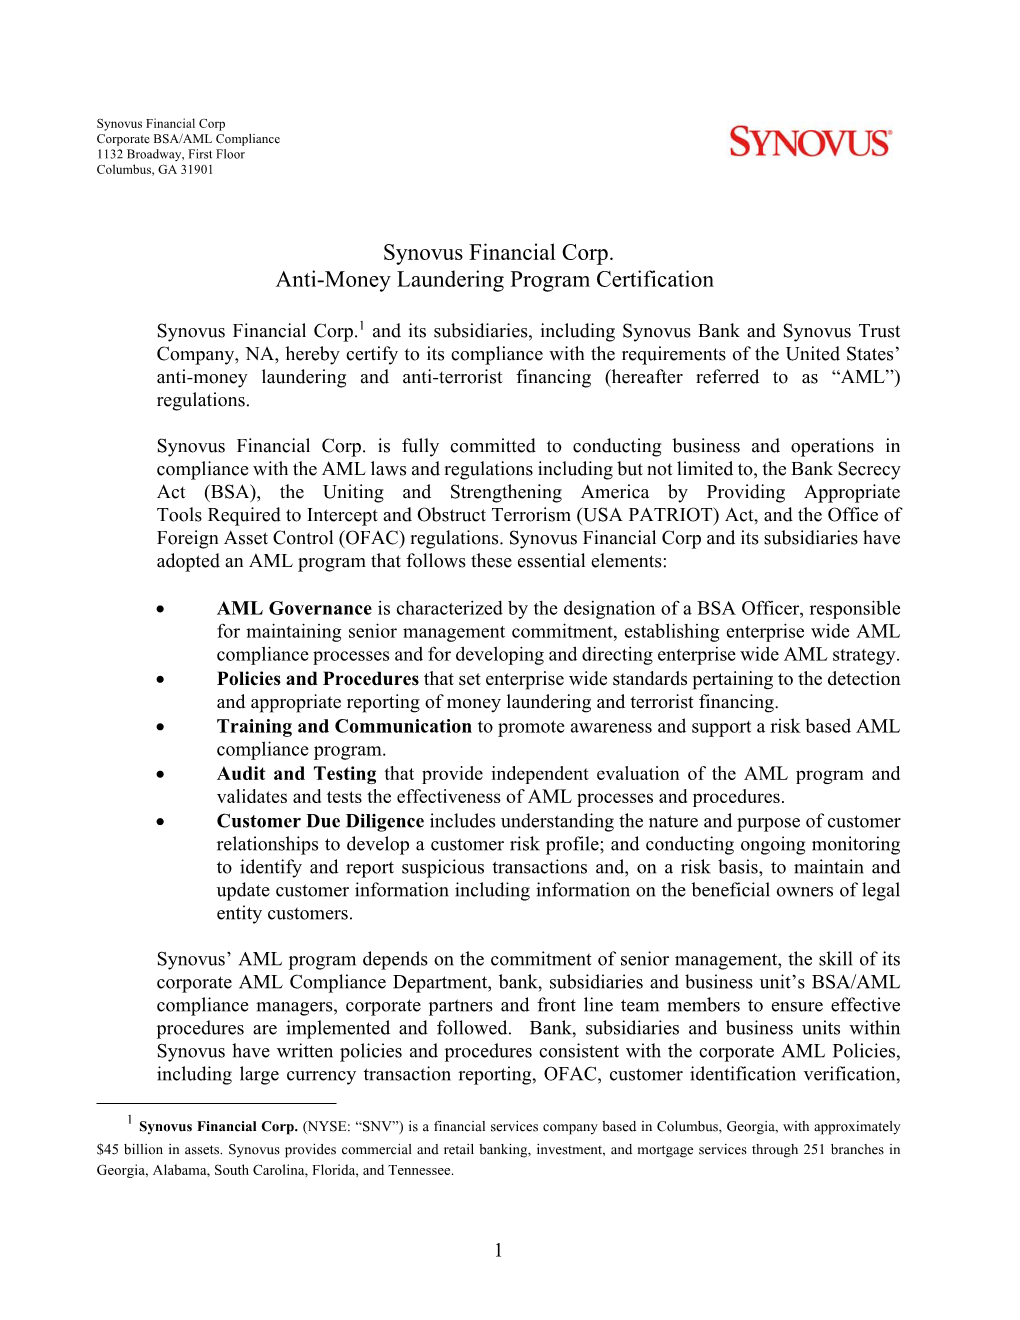 Synovus Financial Corp. Anti-Money Laundering Program Certification